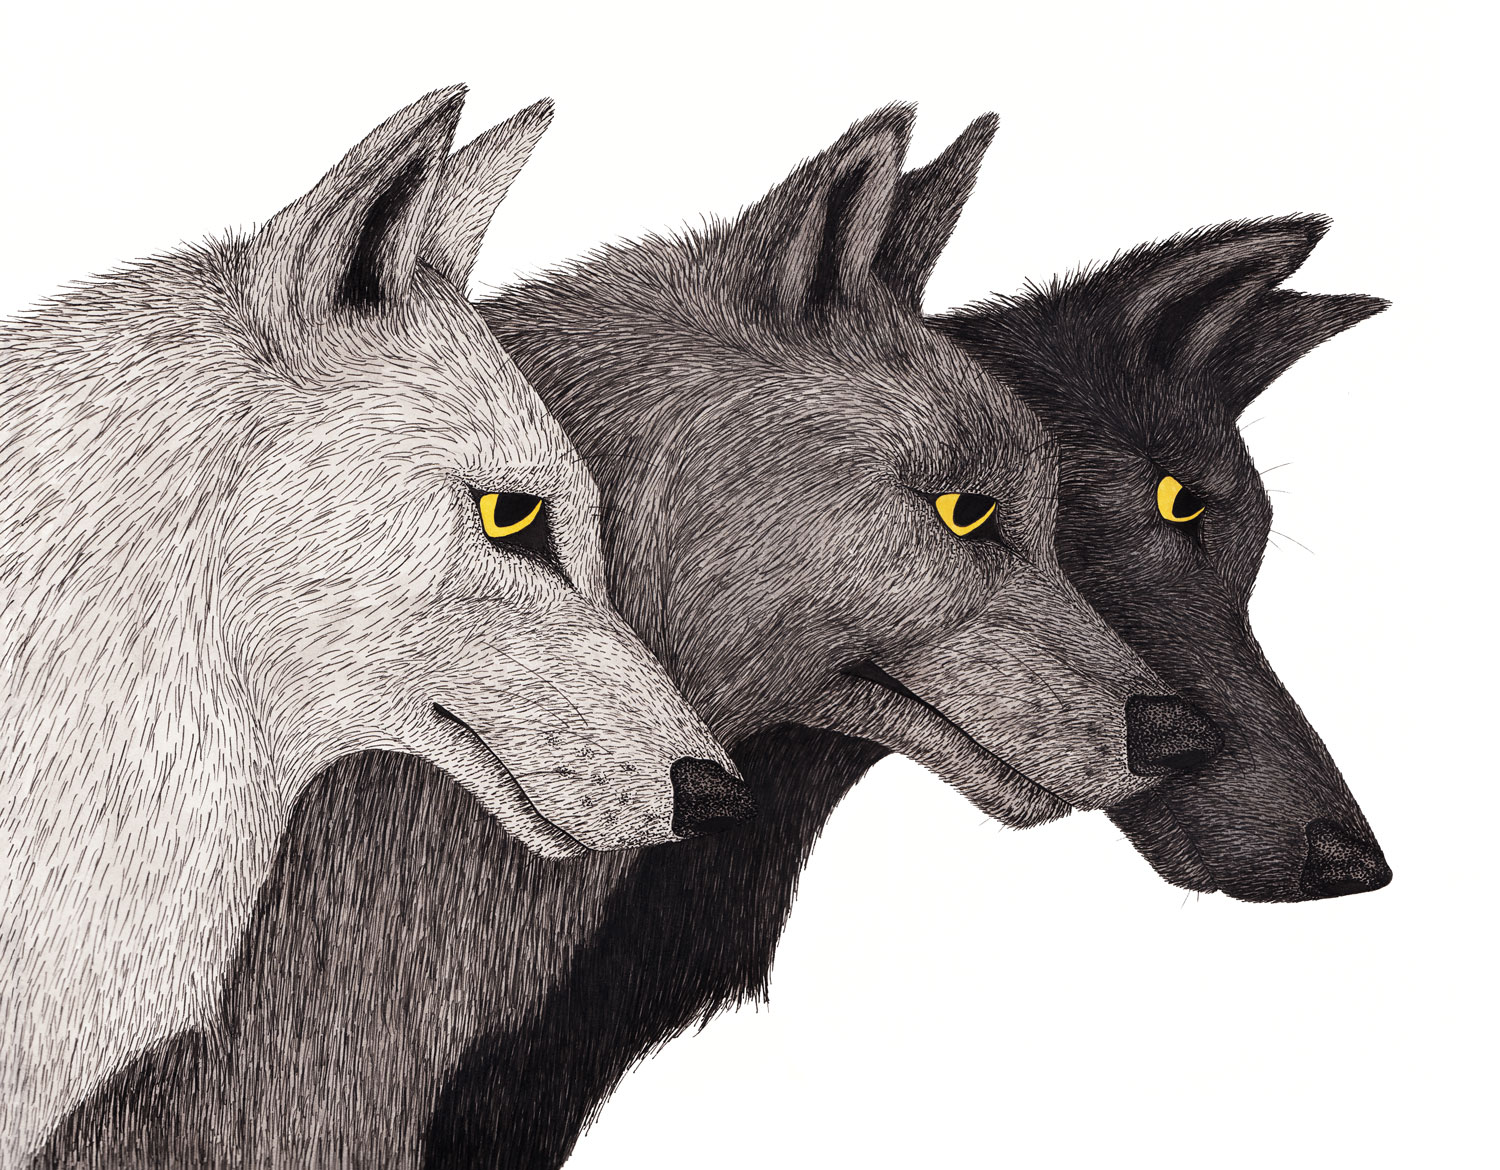 wolf-pack-grey-wolves-yellow-eyes-illustration-matthew-woods.jpg